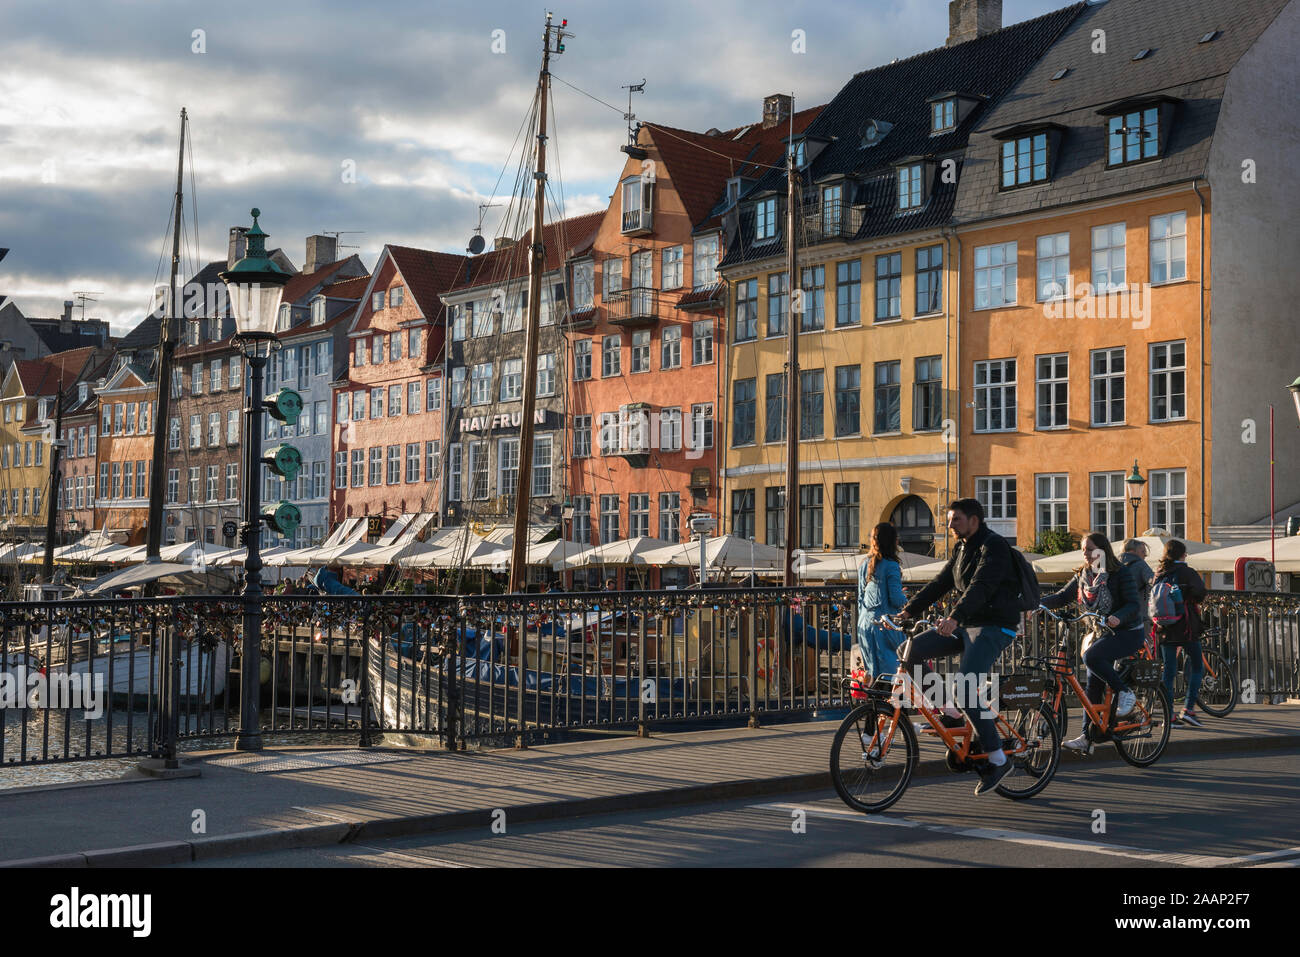 Copenhagen old town, view of people cycling across the Nyhavn bridge in the Old Town harbor district of Copenhagen, Denmark. Stock Photo